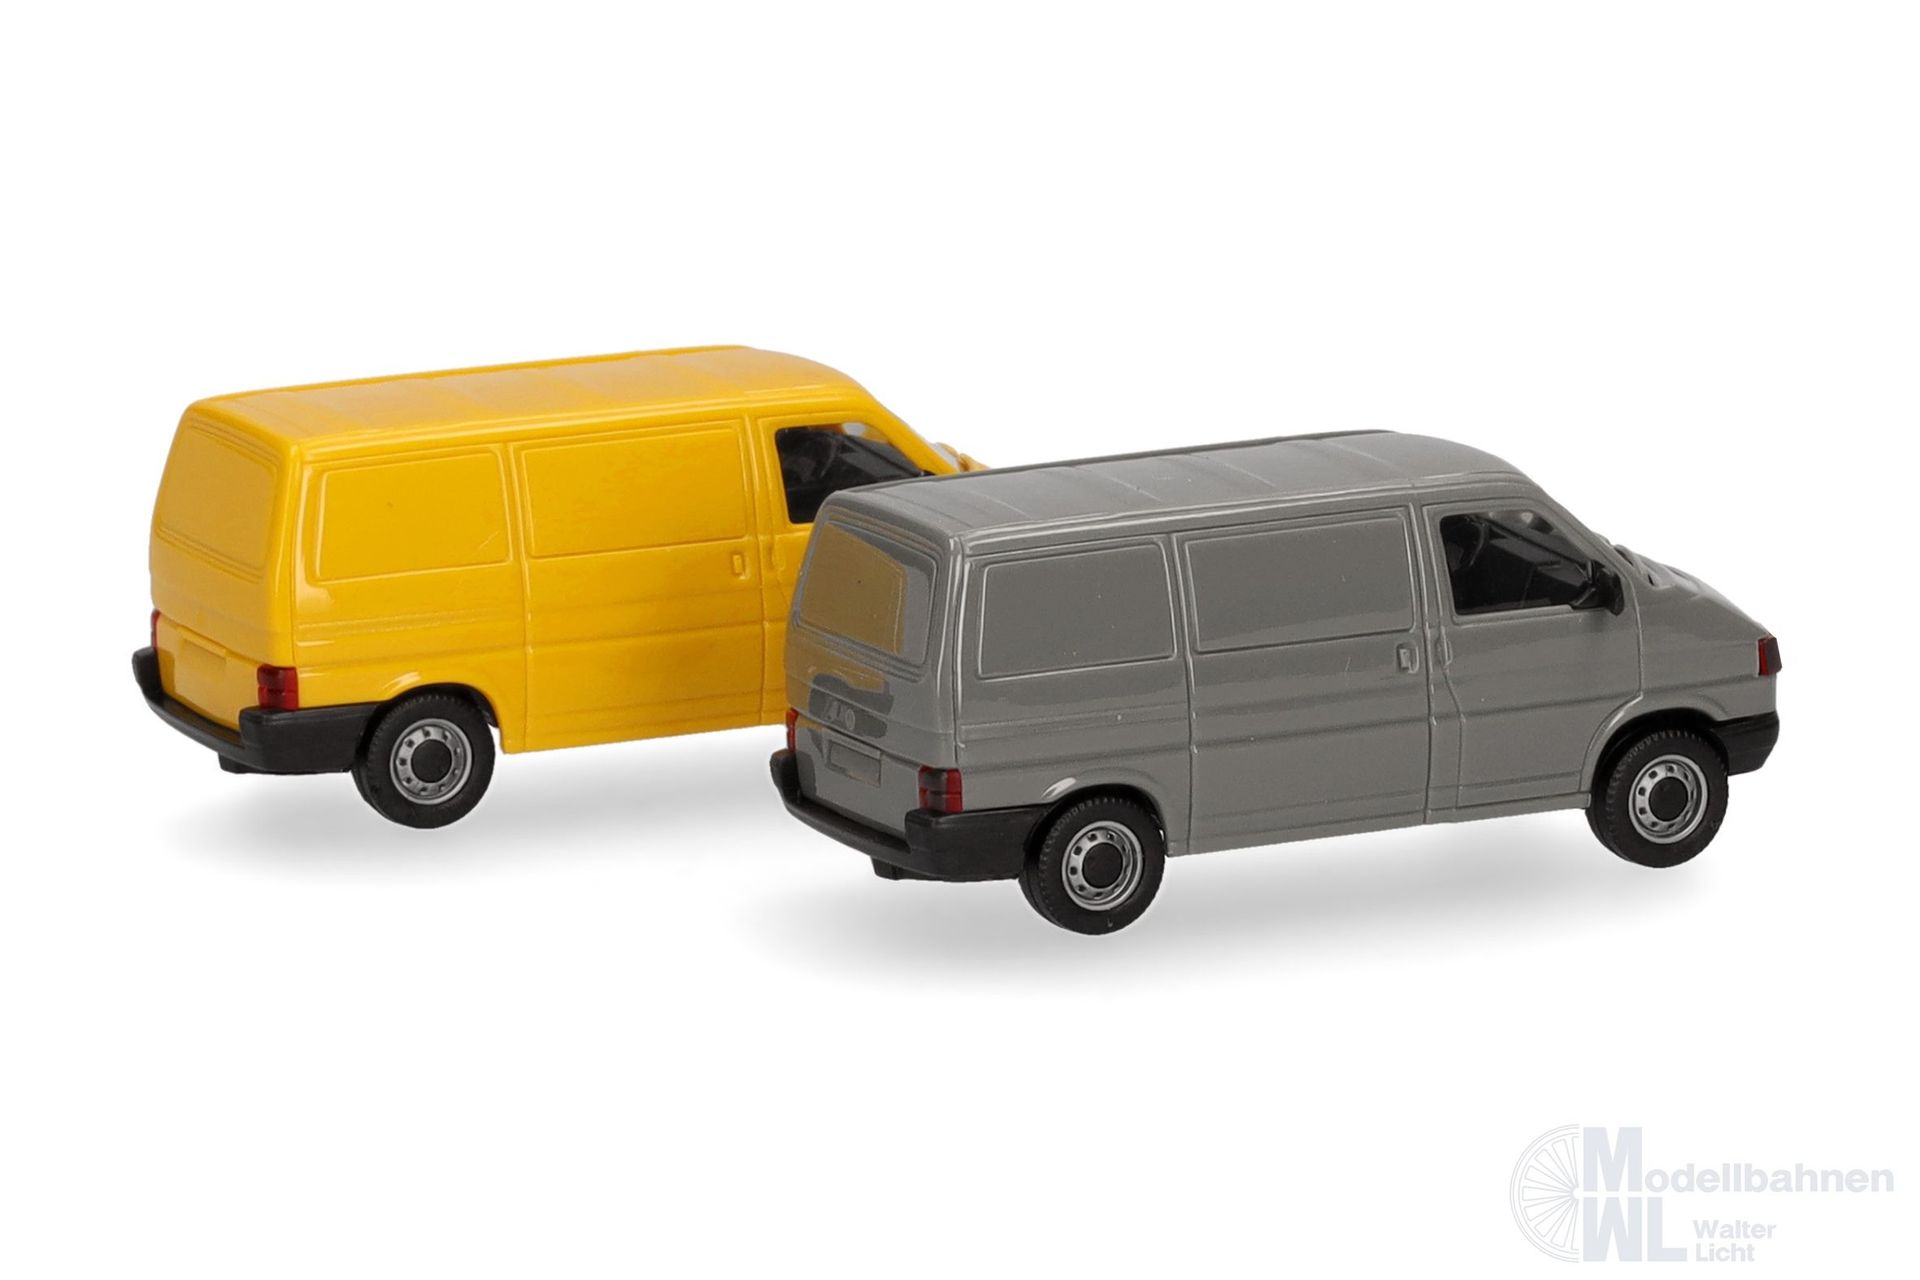 Herpa 012386-004 - MiniKit 2x VW T4 Kasten grau / ginstergelb H0 1:87